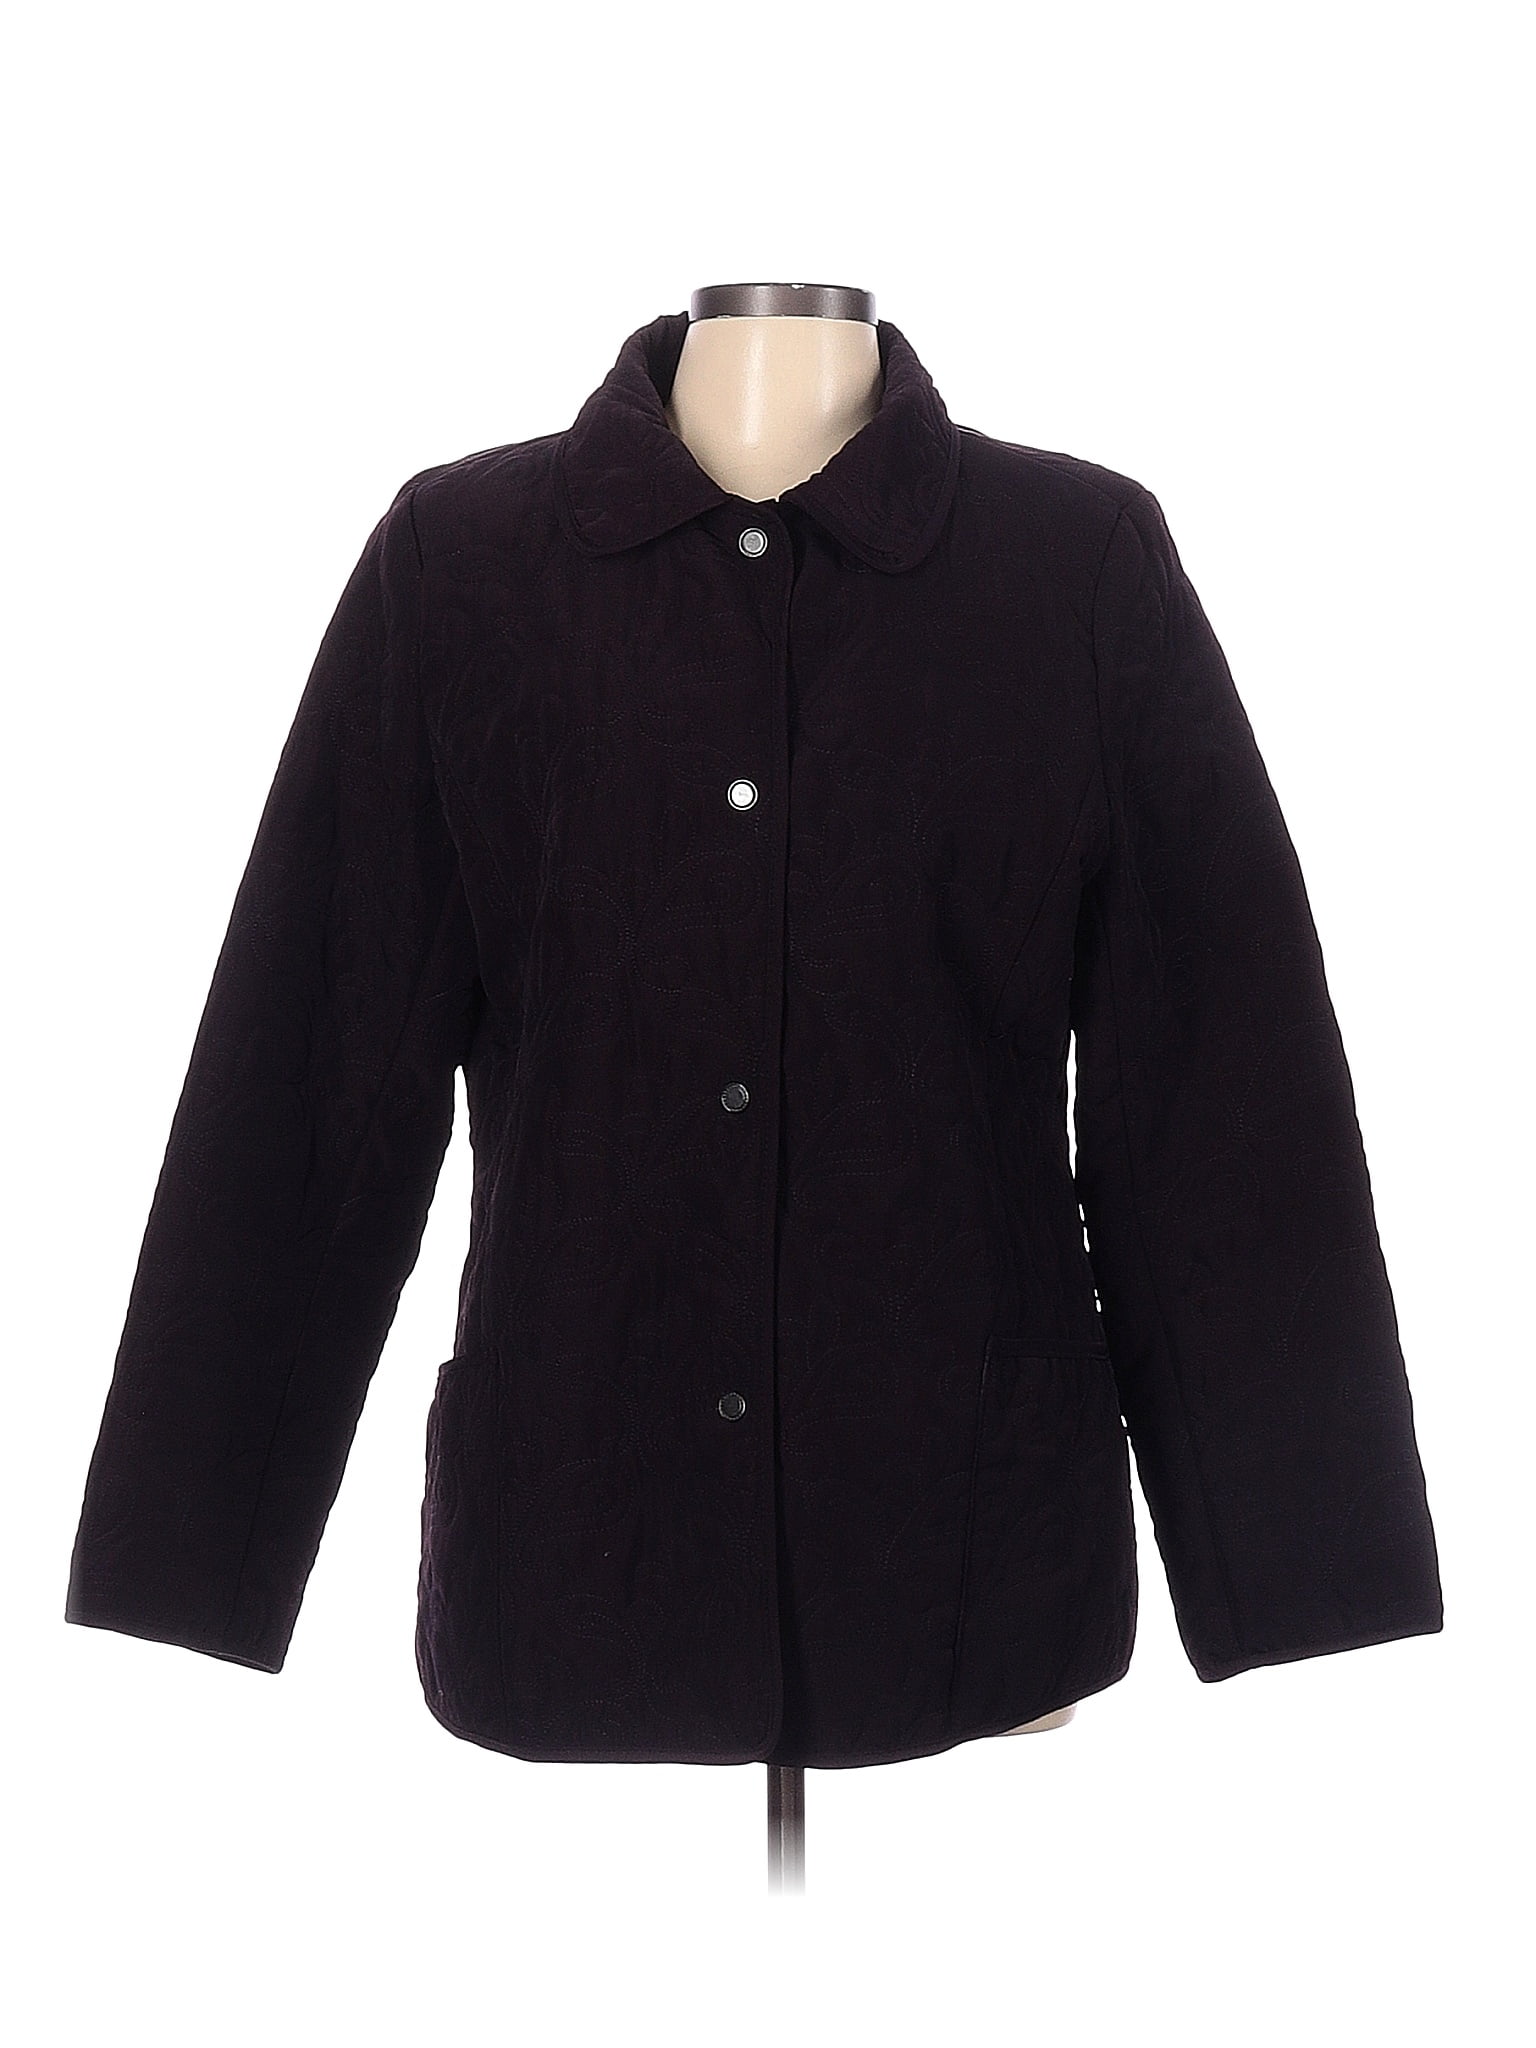 Croft & Barrow 100% Polyester Black Coat Size L - 54% off | thredUP